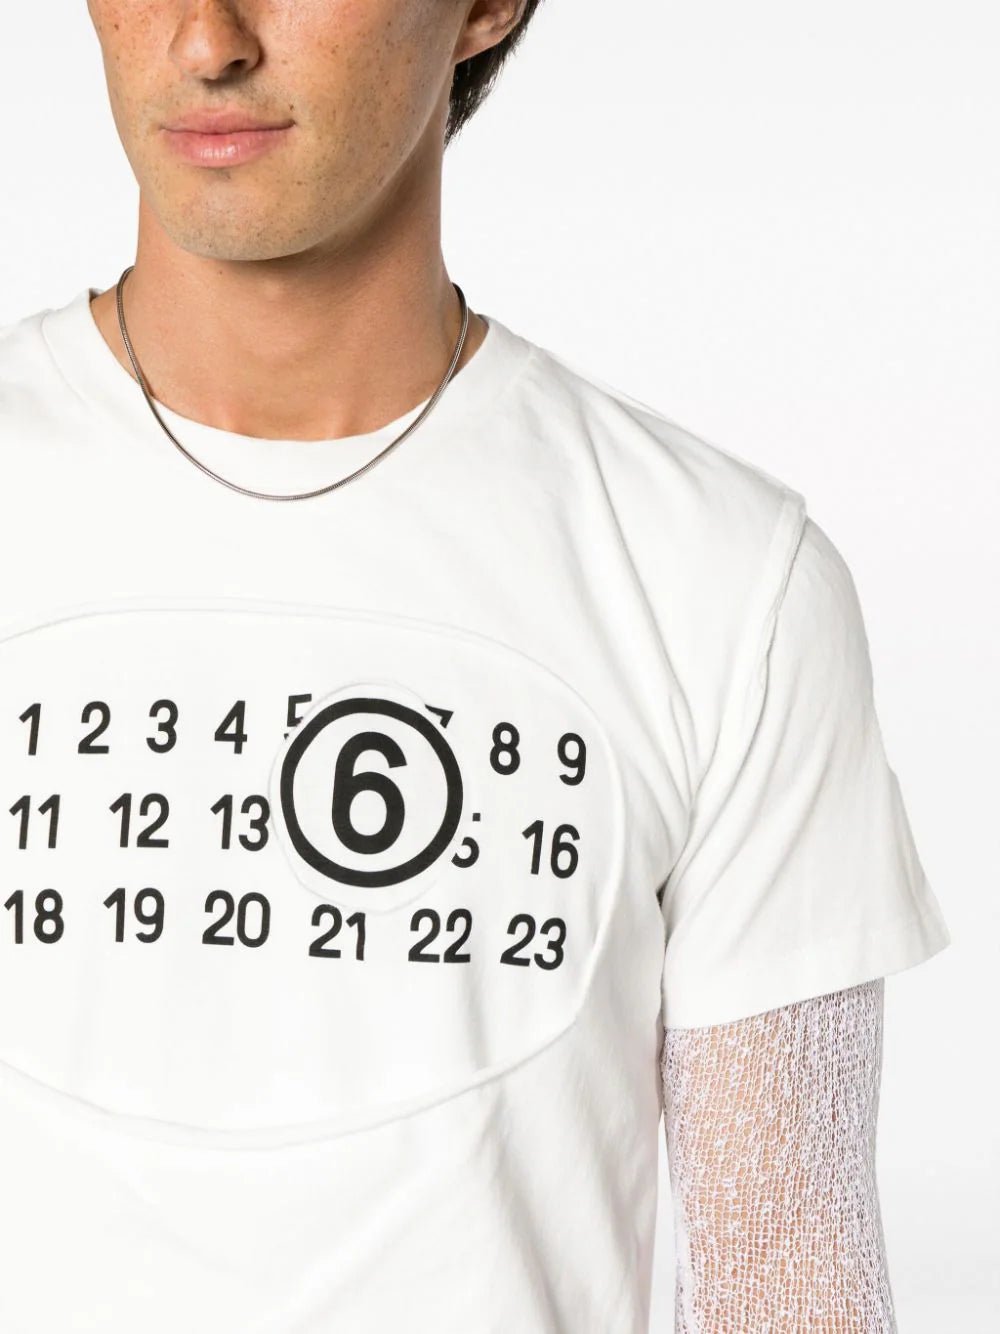 MM6 Maison MargielaSignature Numbers Motif Cotton T-Shirt at Fashion Clinic